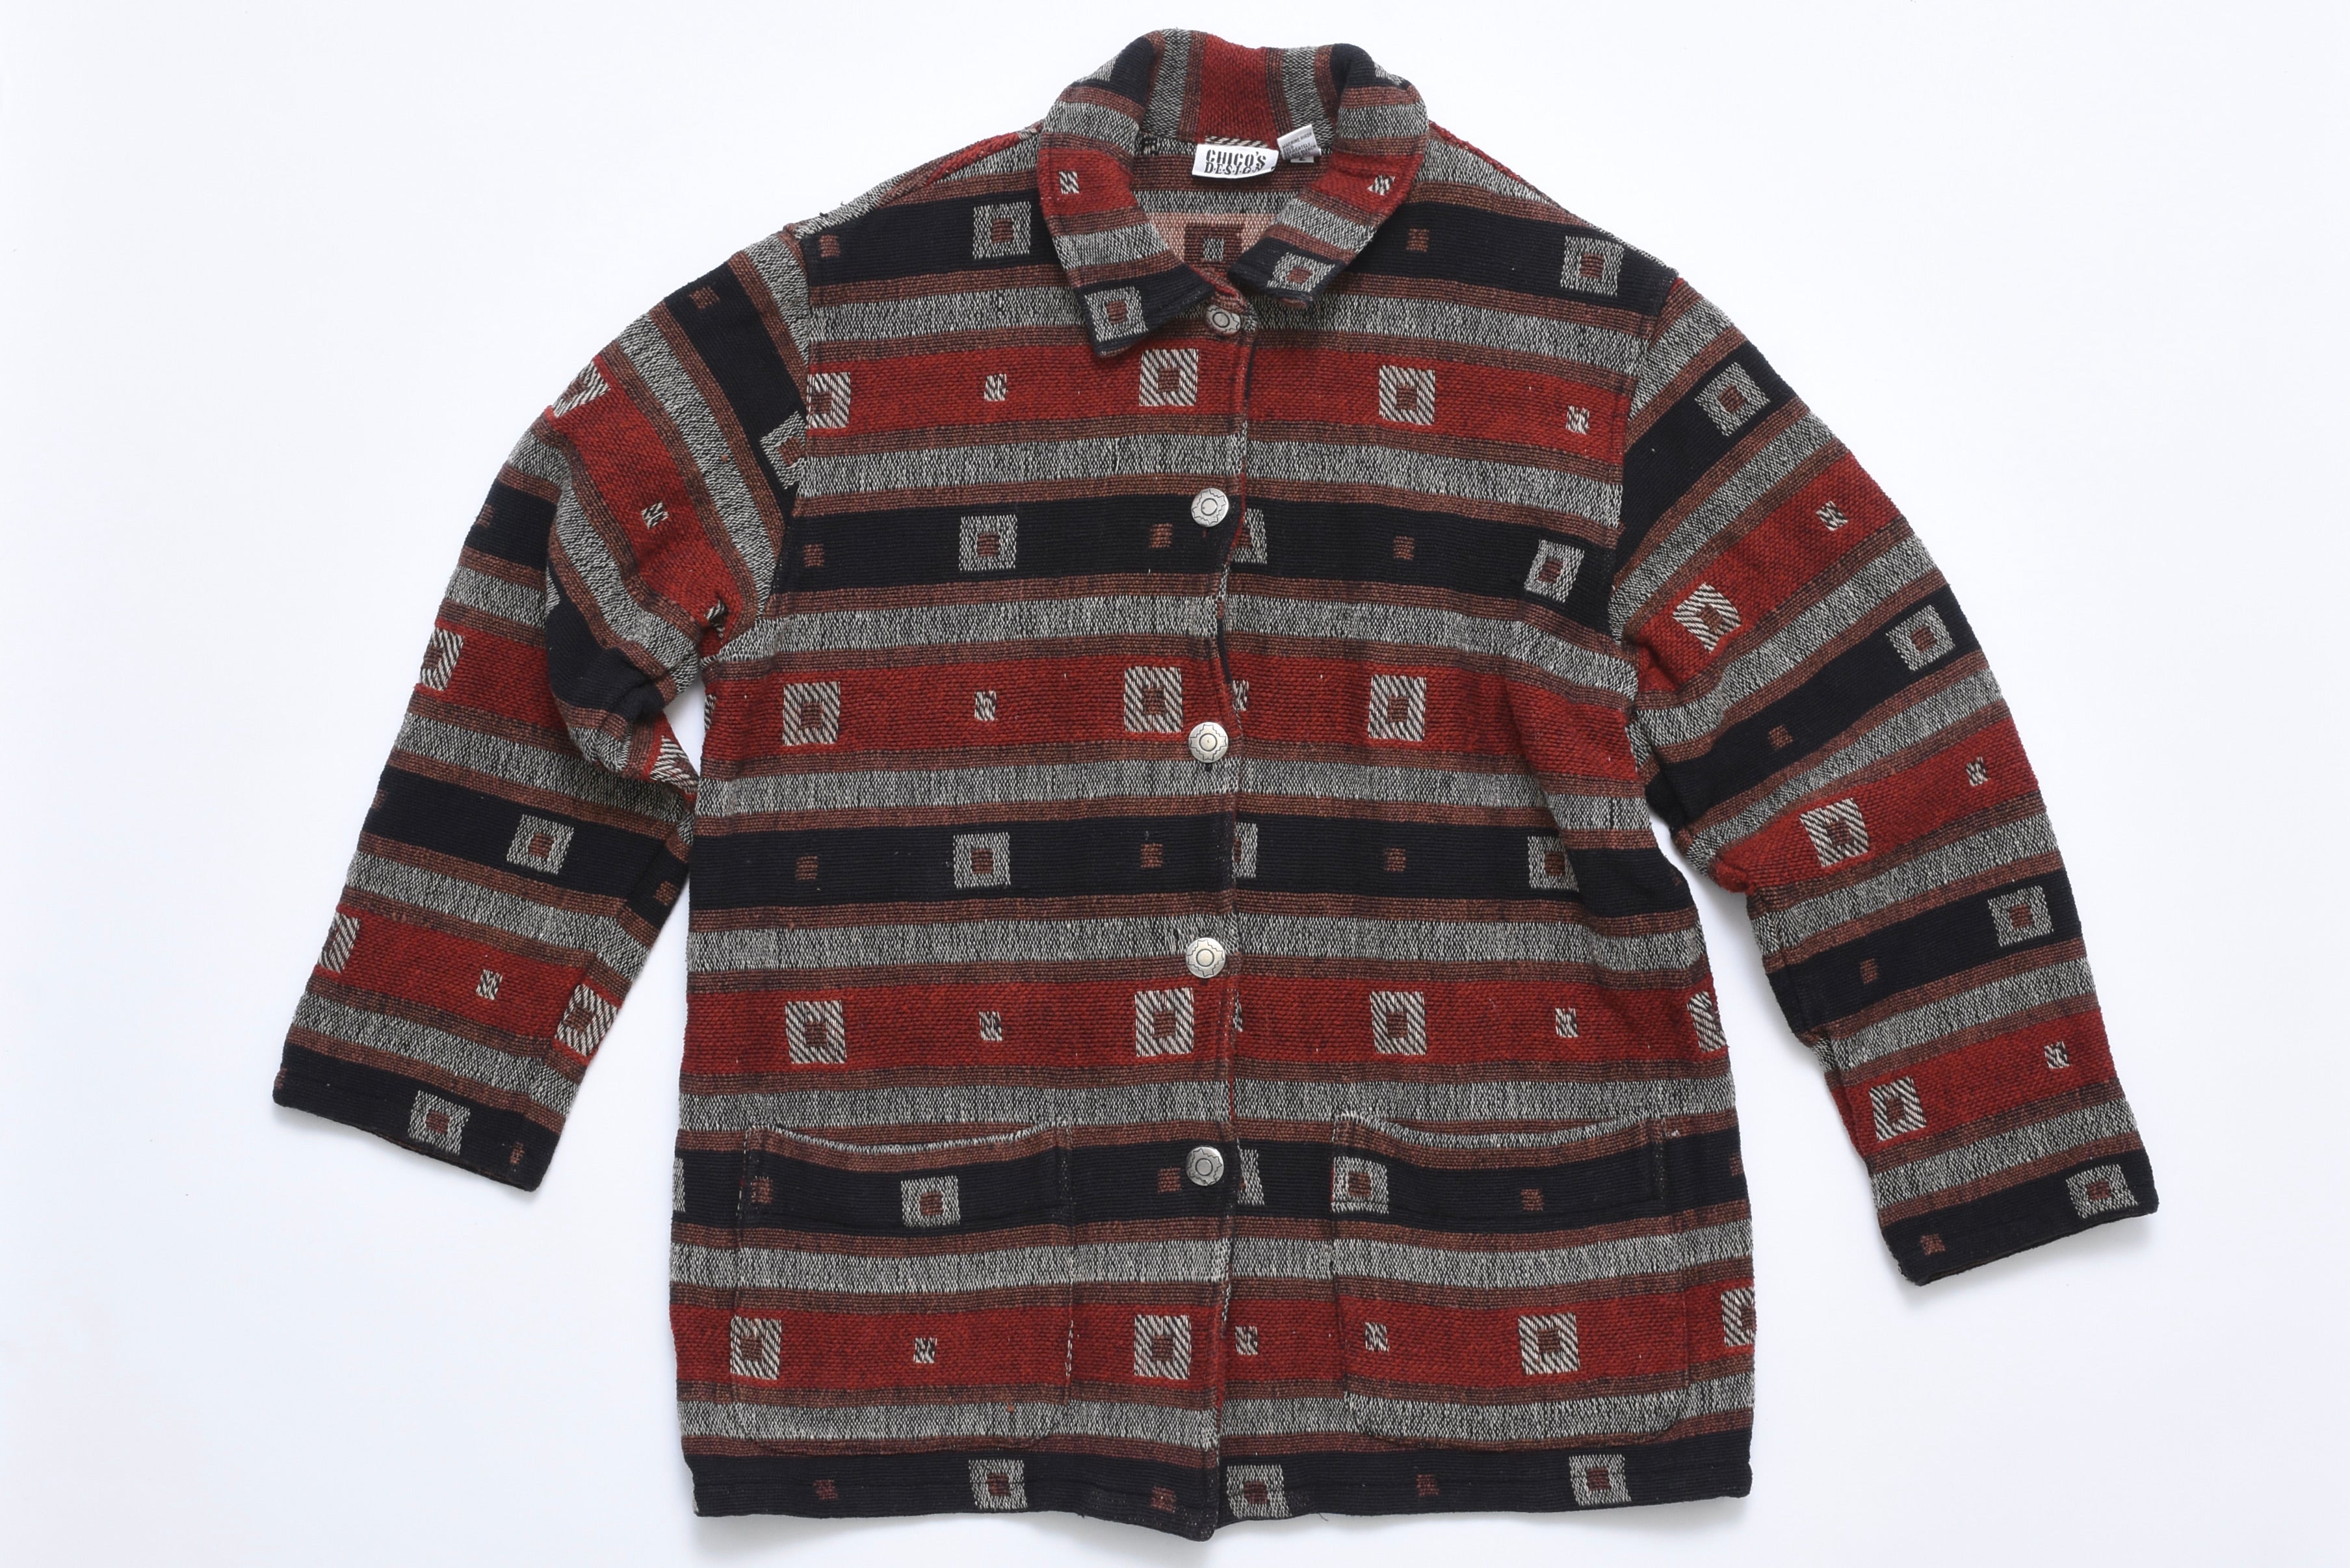 HdN Red-Black Tapestry Jacket, Vintage Select